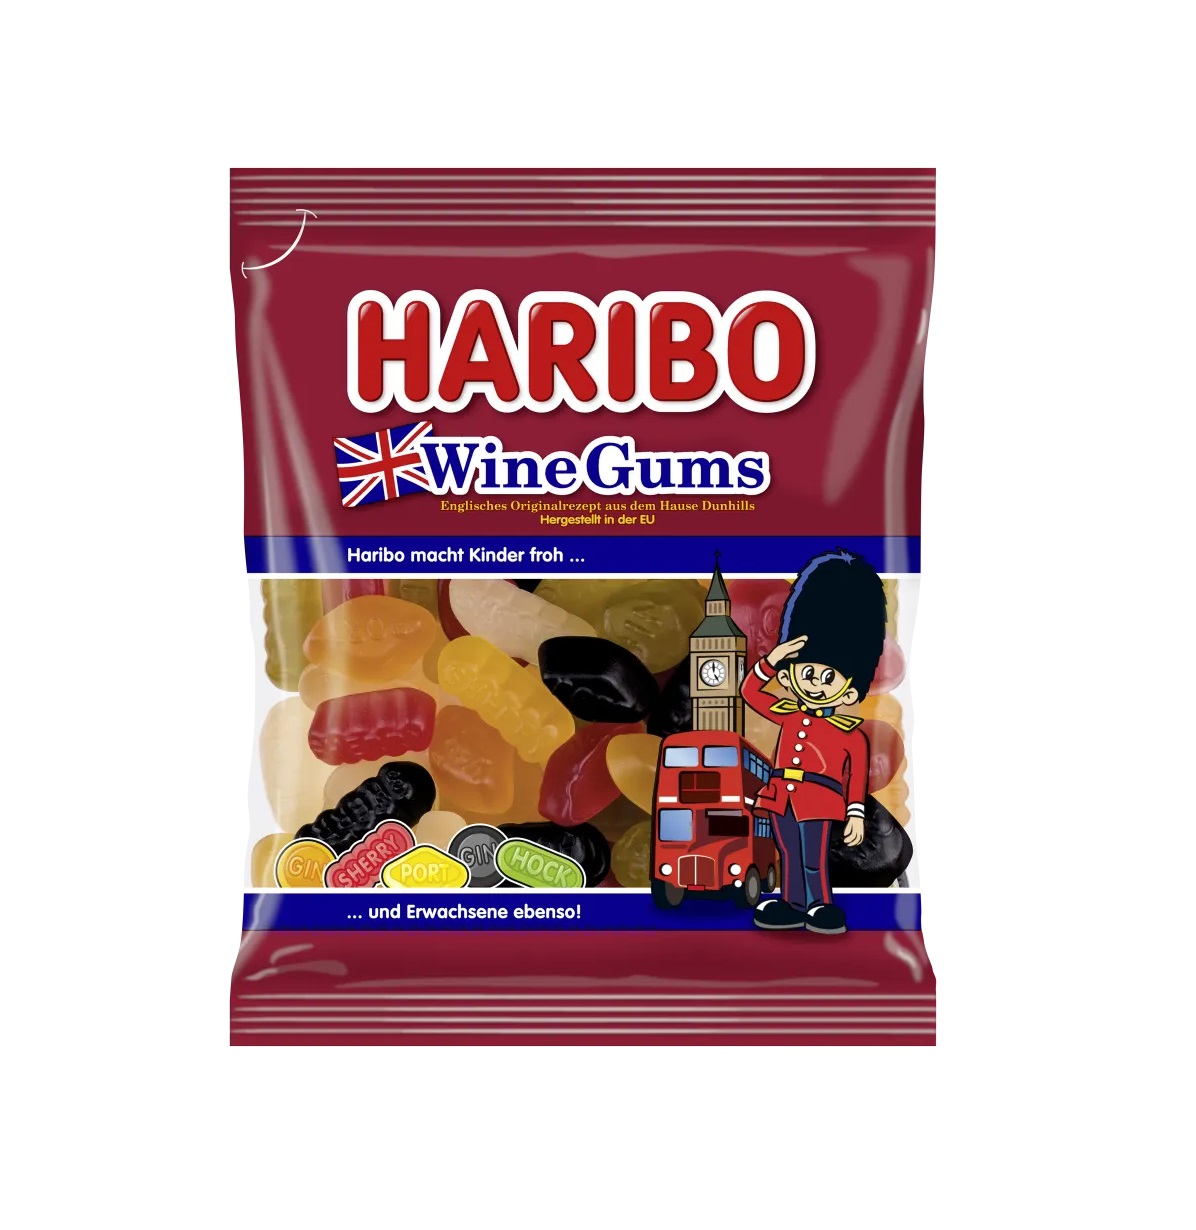 Haribo – Wine Gums British- 175 g / Wine gums | German Deli Ph